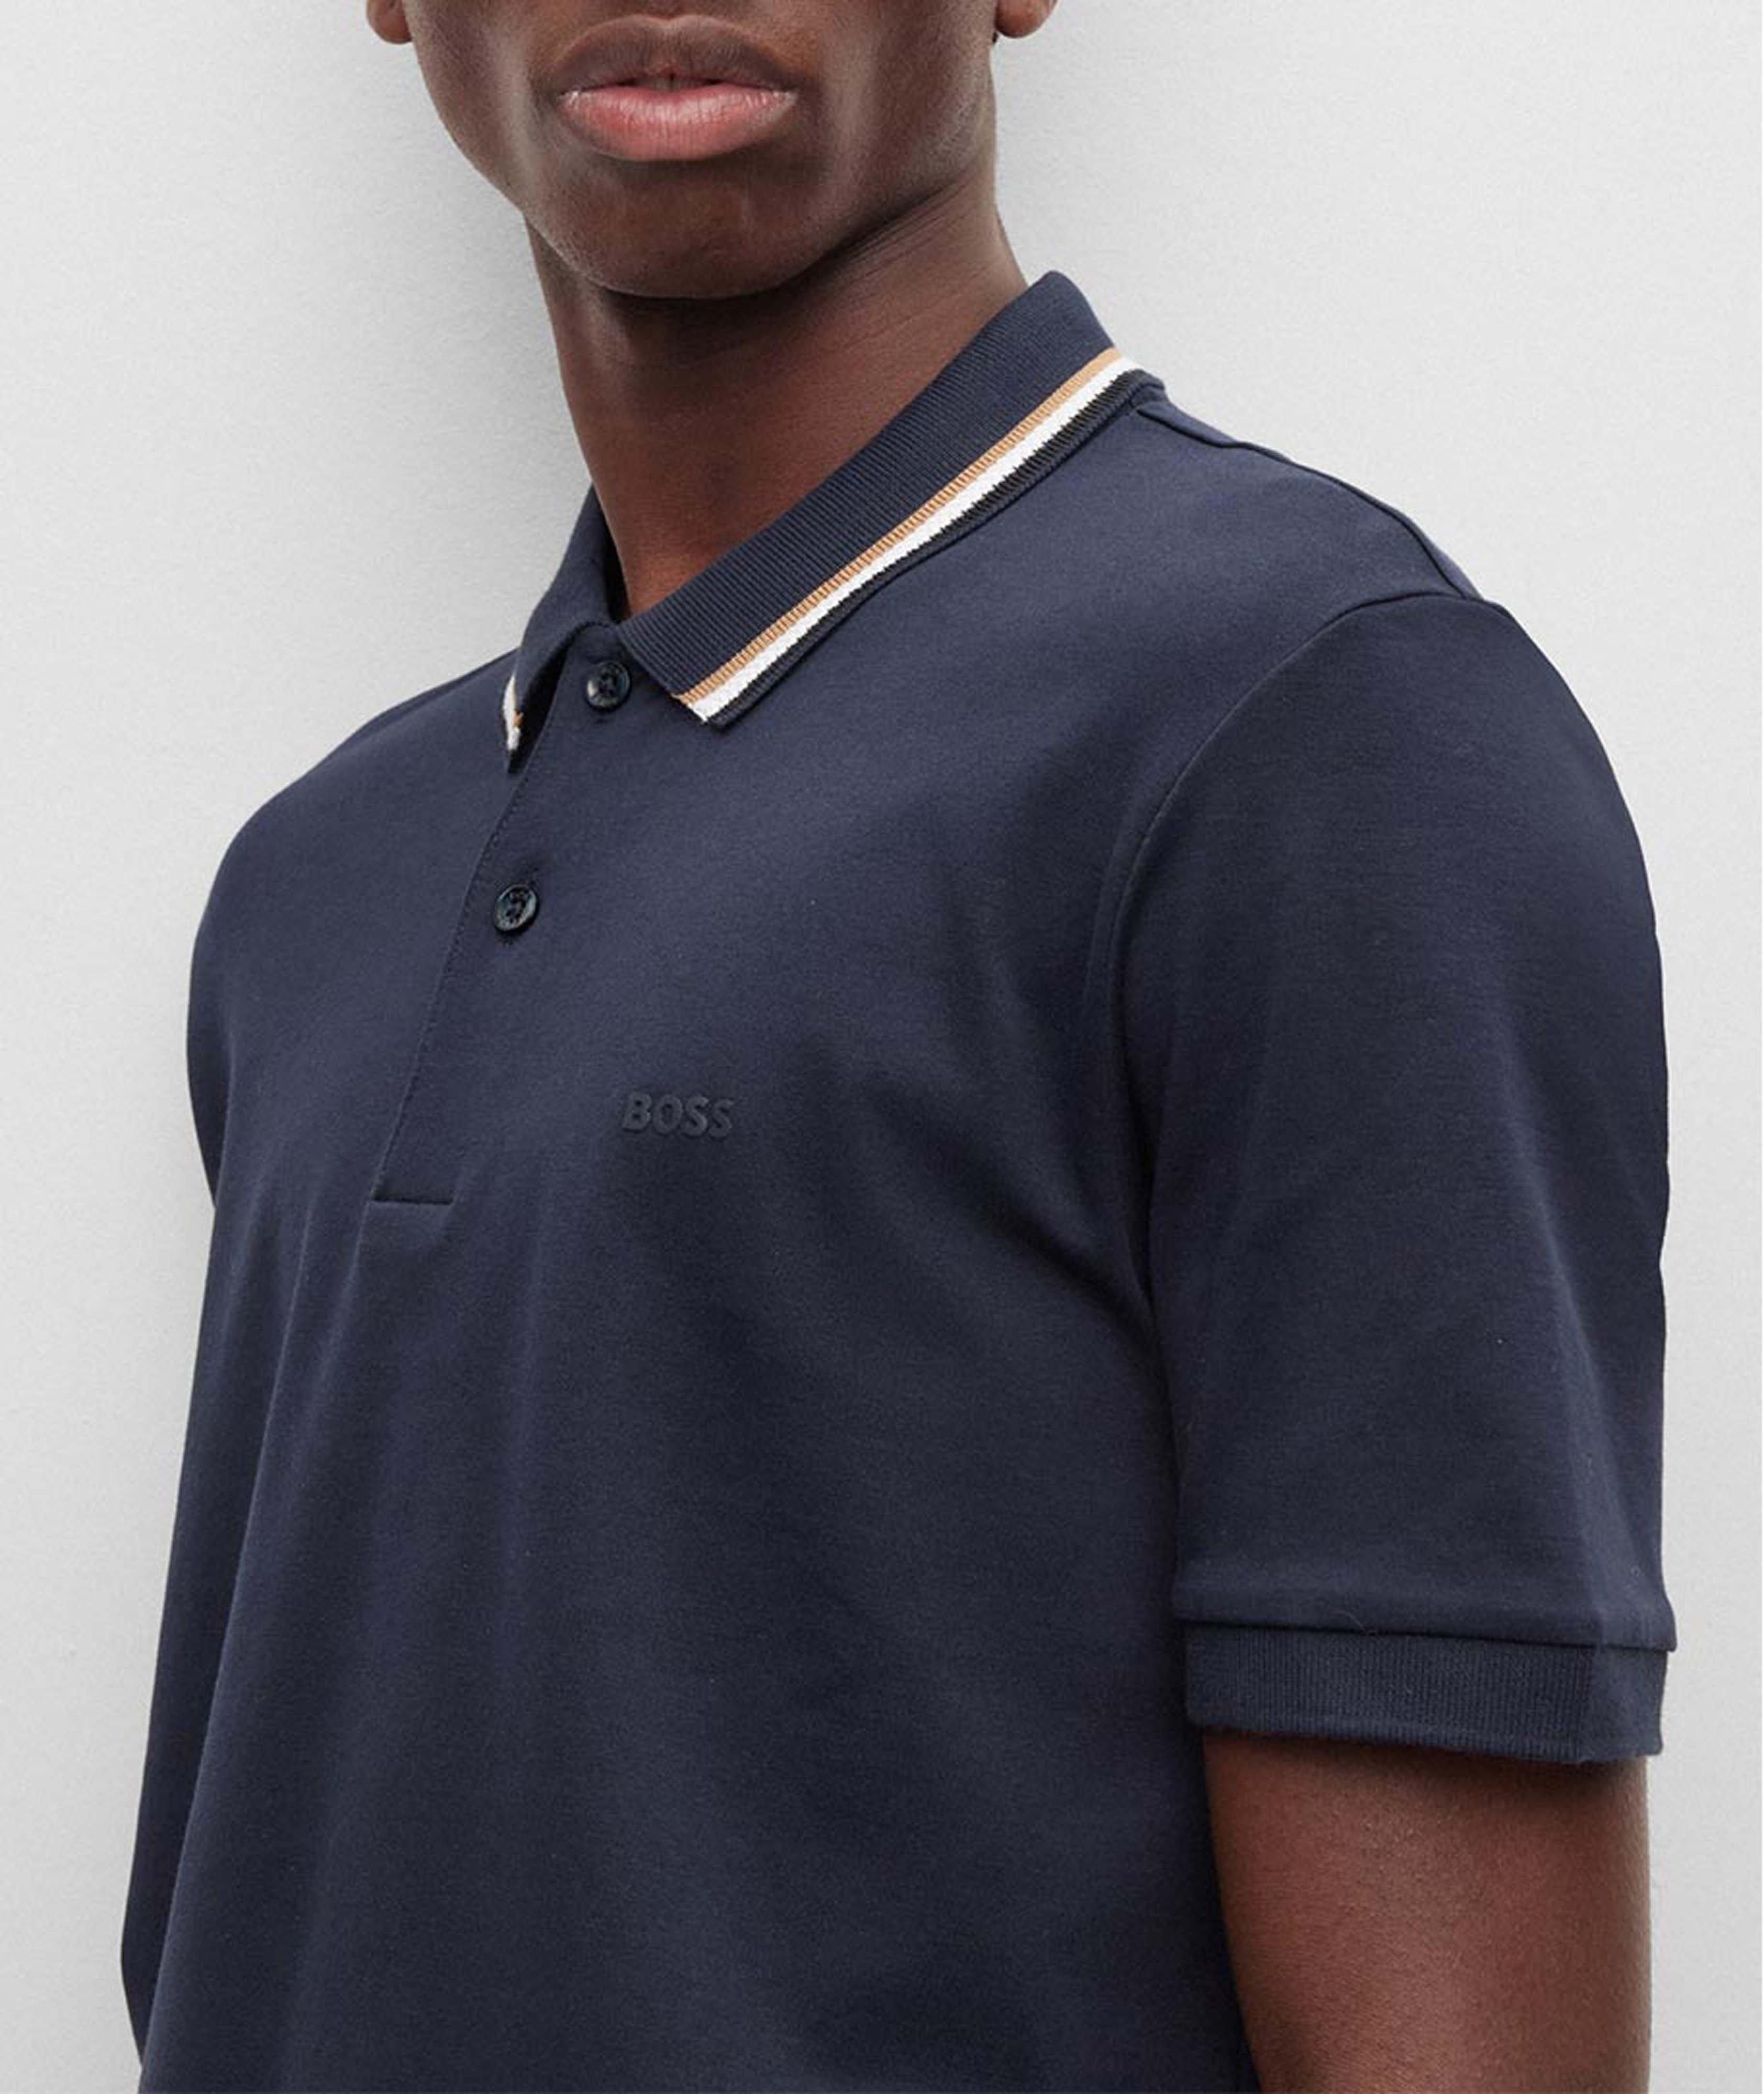 Slim-Fit Cotton Polo Shirt image 4